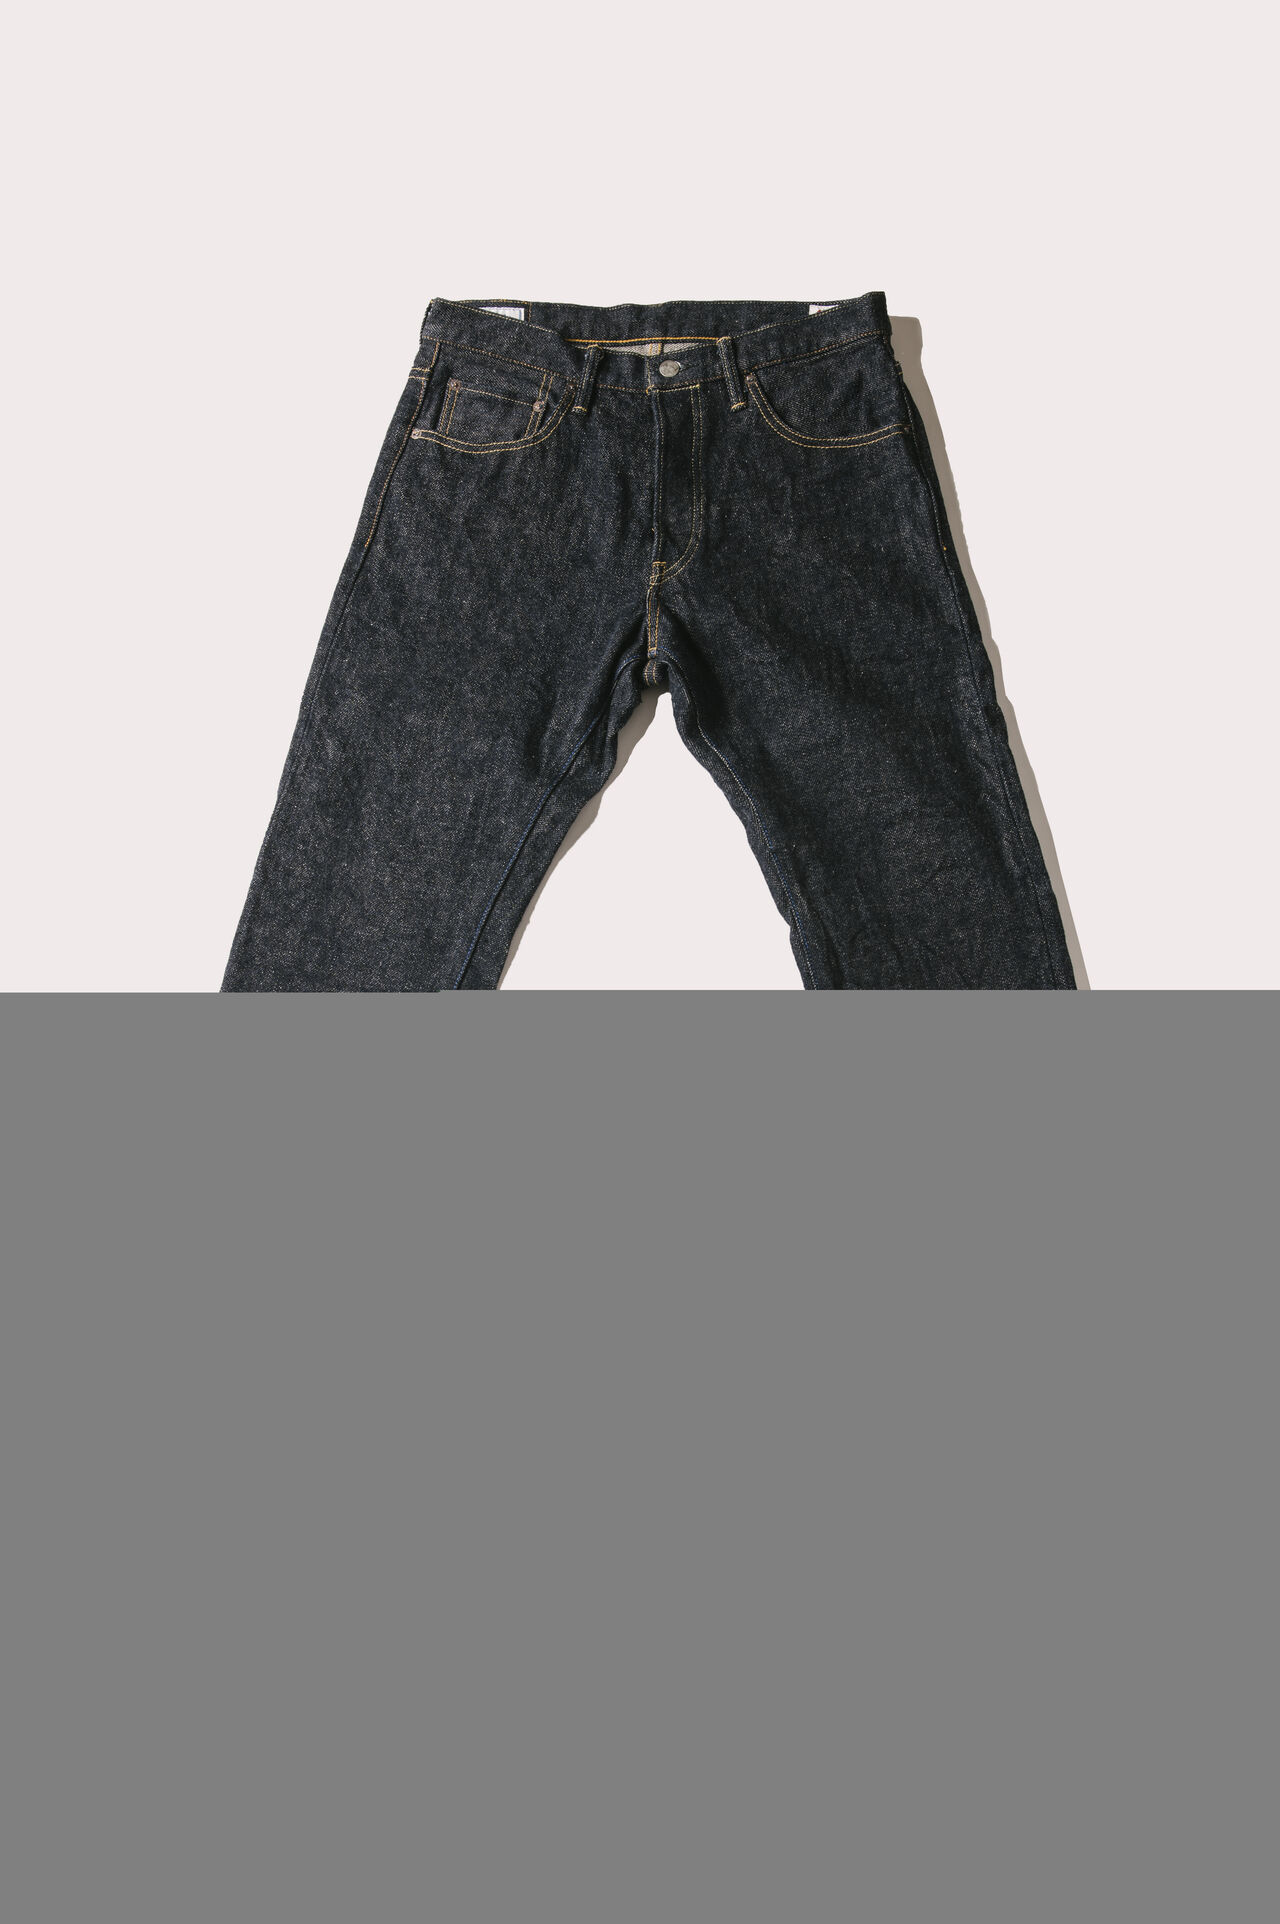 OTNHT ONI x TANUKI Collaboration 20oz Natural Indigo Secret Denim High Tapered Jeans,, large image number 13